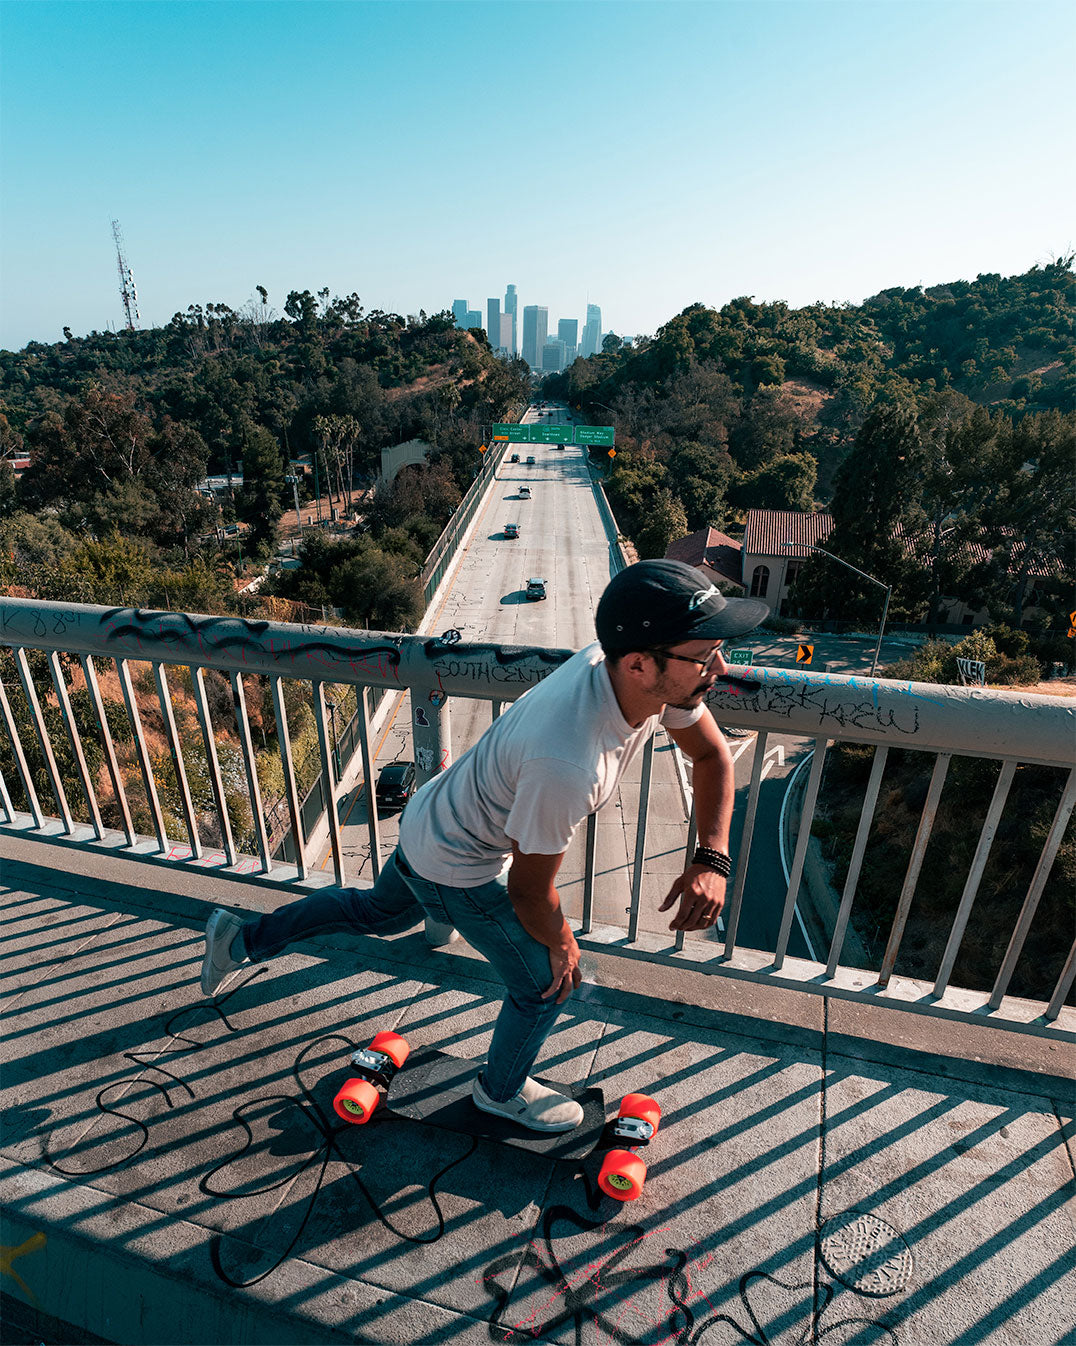 Ethan Cochard on the Loaded Fathom longboard skateboard